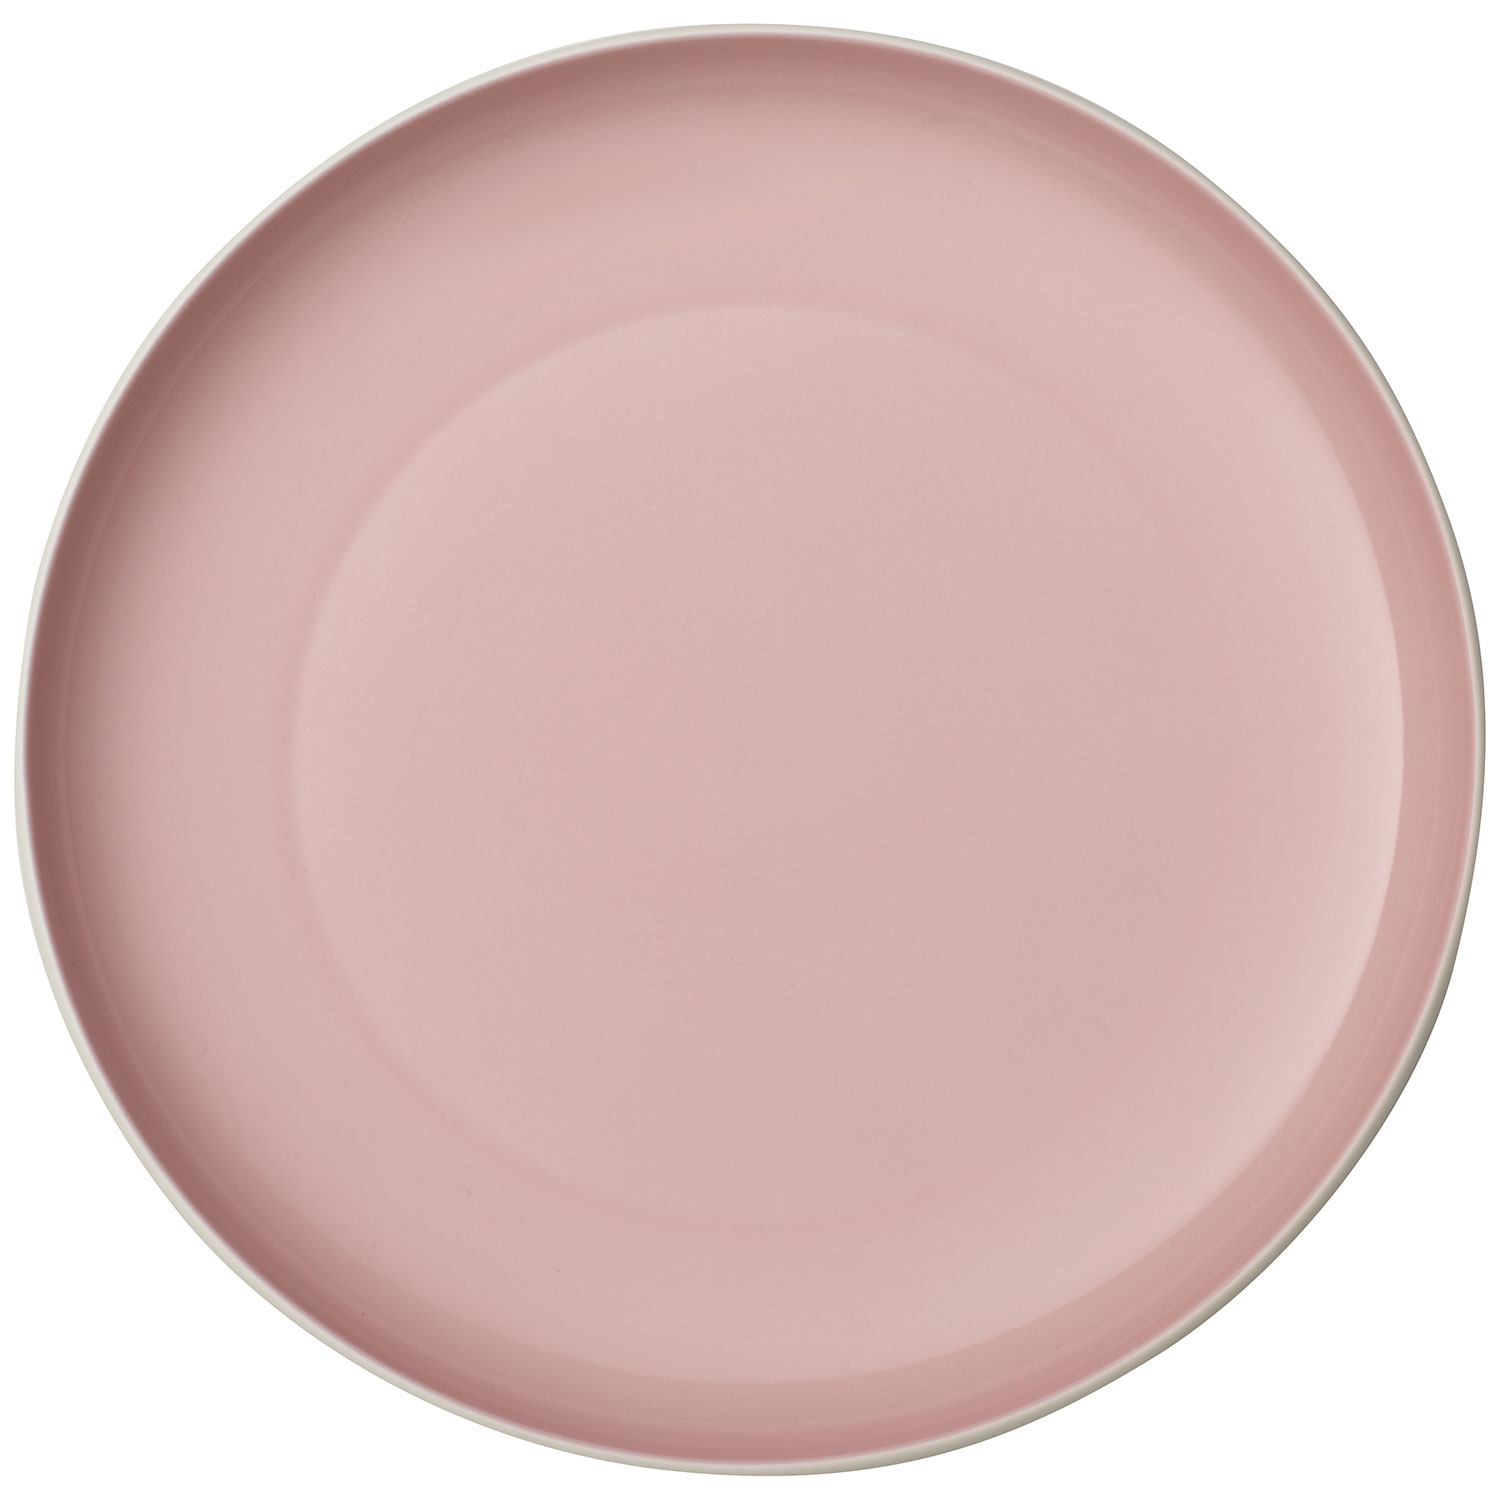 Villeroy & Boch It's My Match Dinner Plate - Powder Pink